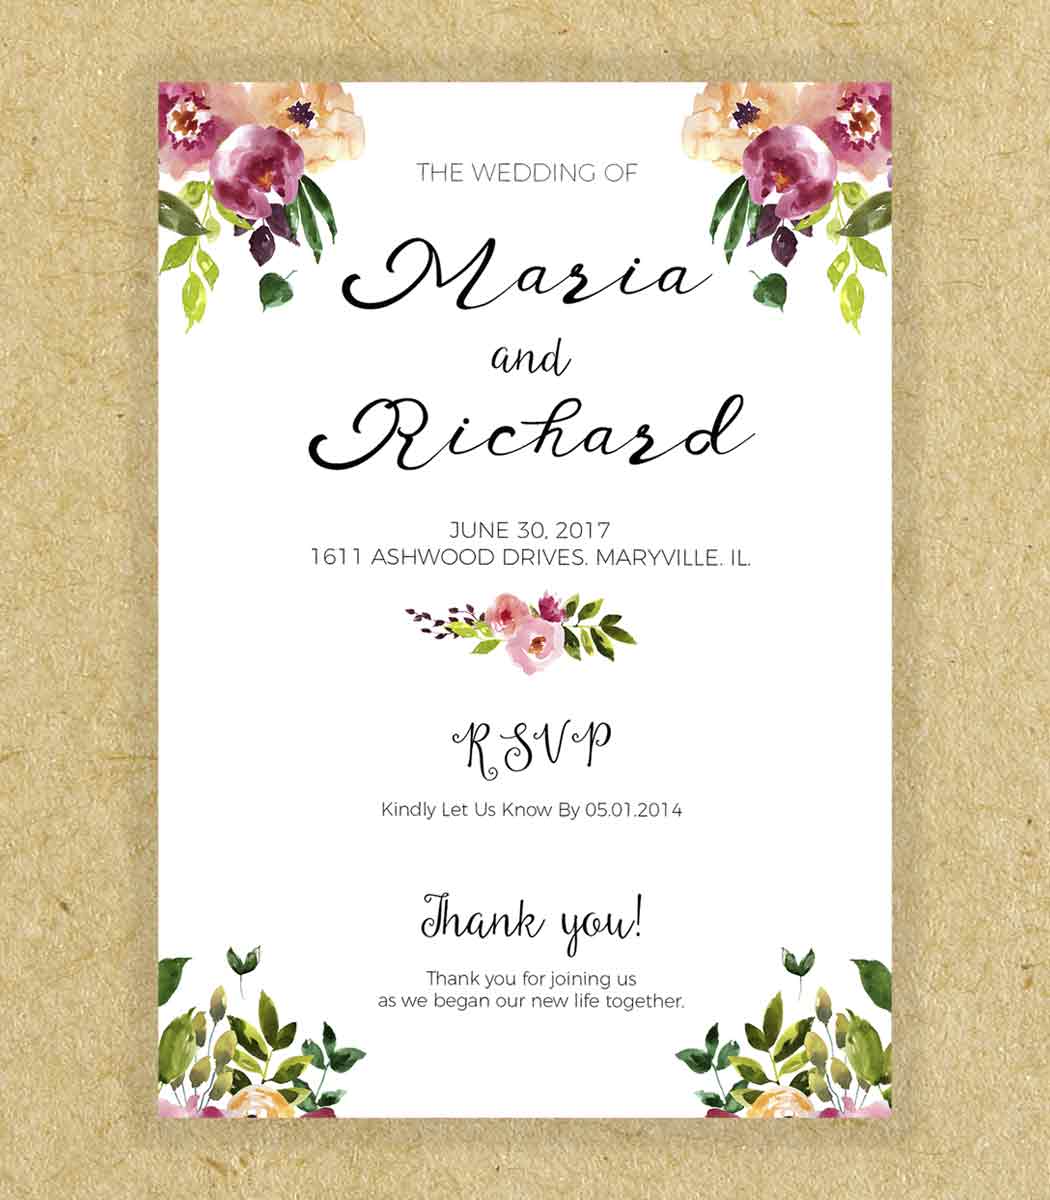 Wedding Invitation Card Description